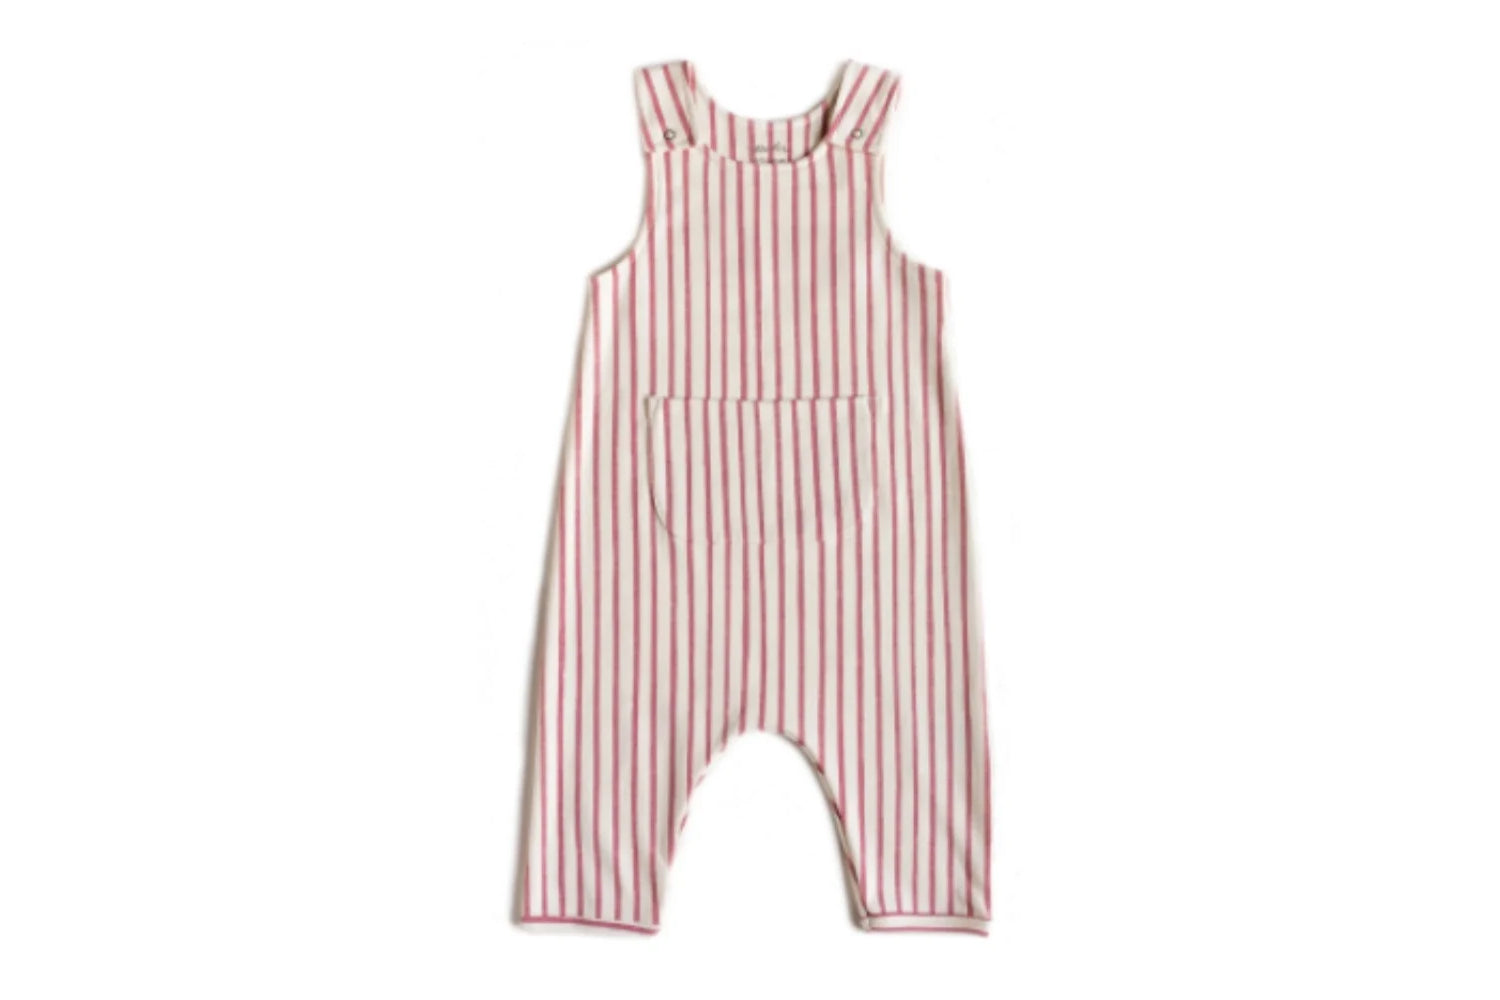 pehr stripes away dark pink organic cotton overall